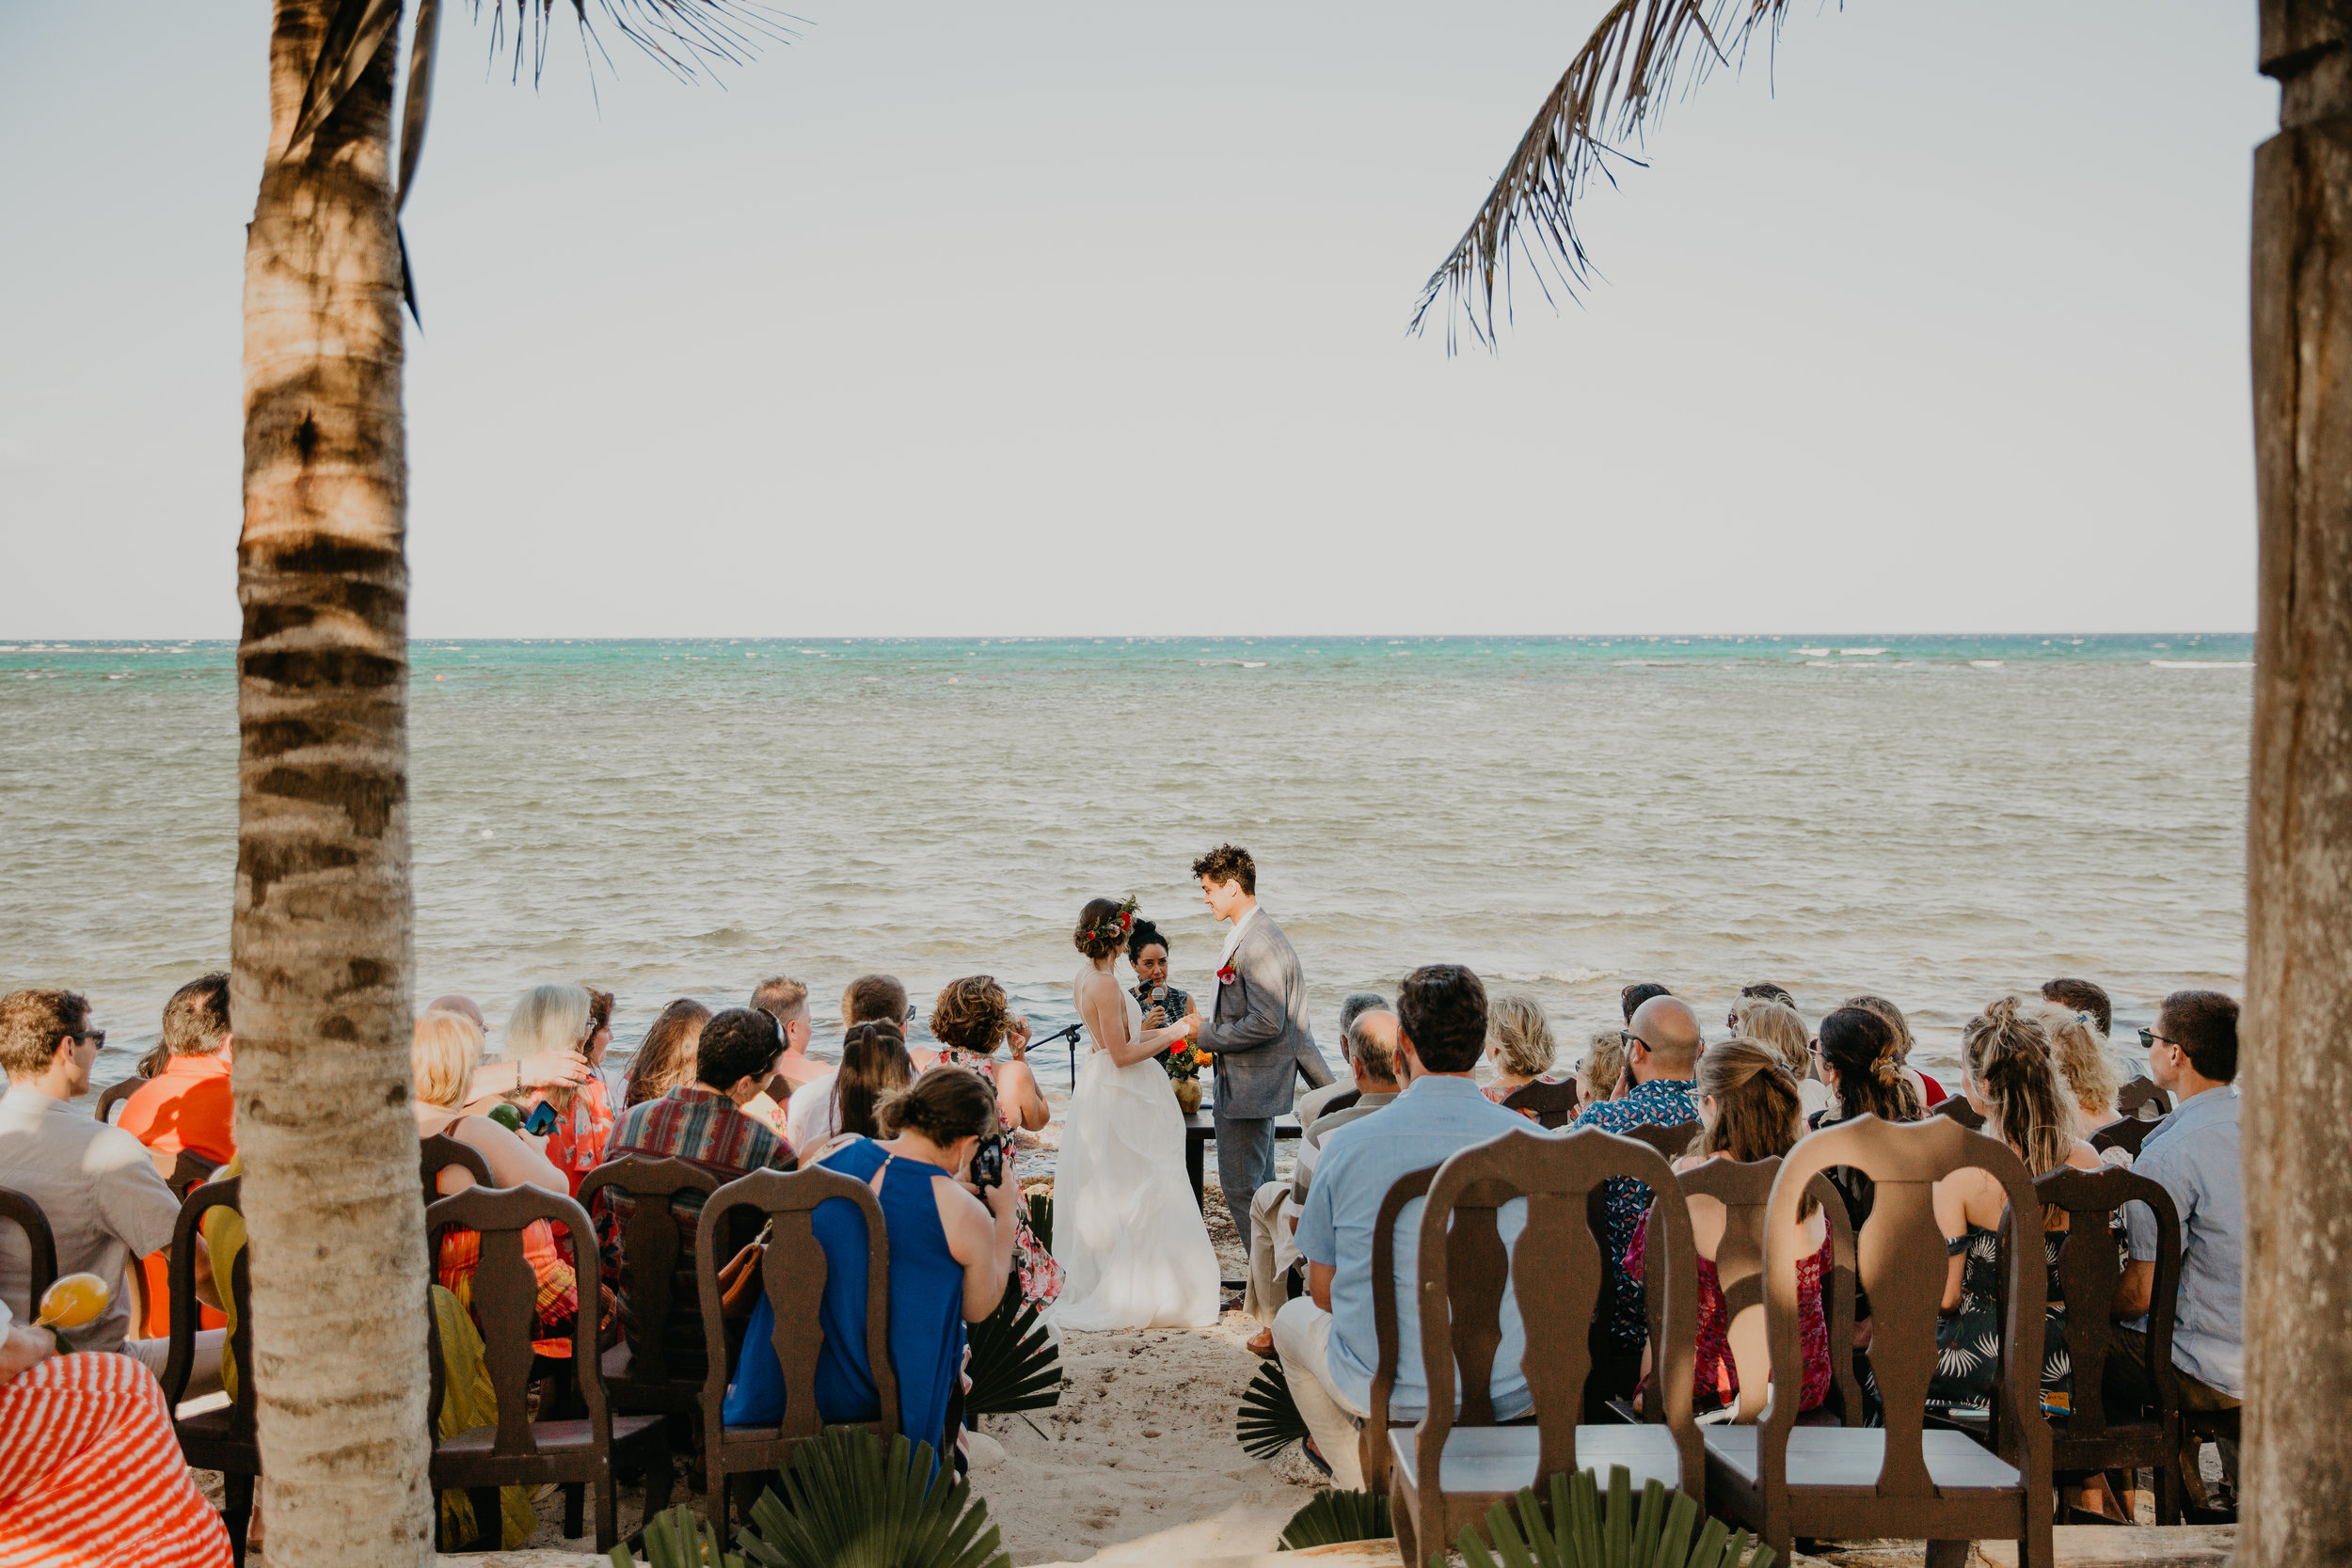 Nicole-Daacke-Photography-beachfront-akumal-destionation-wedding-tulum-mexico-elopement-photographer-destination-wedding-inspiration-sunset-champagne-pop-boho-bride-ocean-tropical-bohemian-tulum-wedding-photos-167.jpg